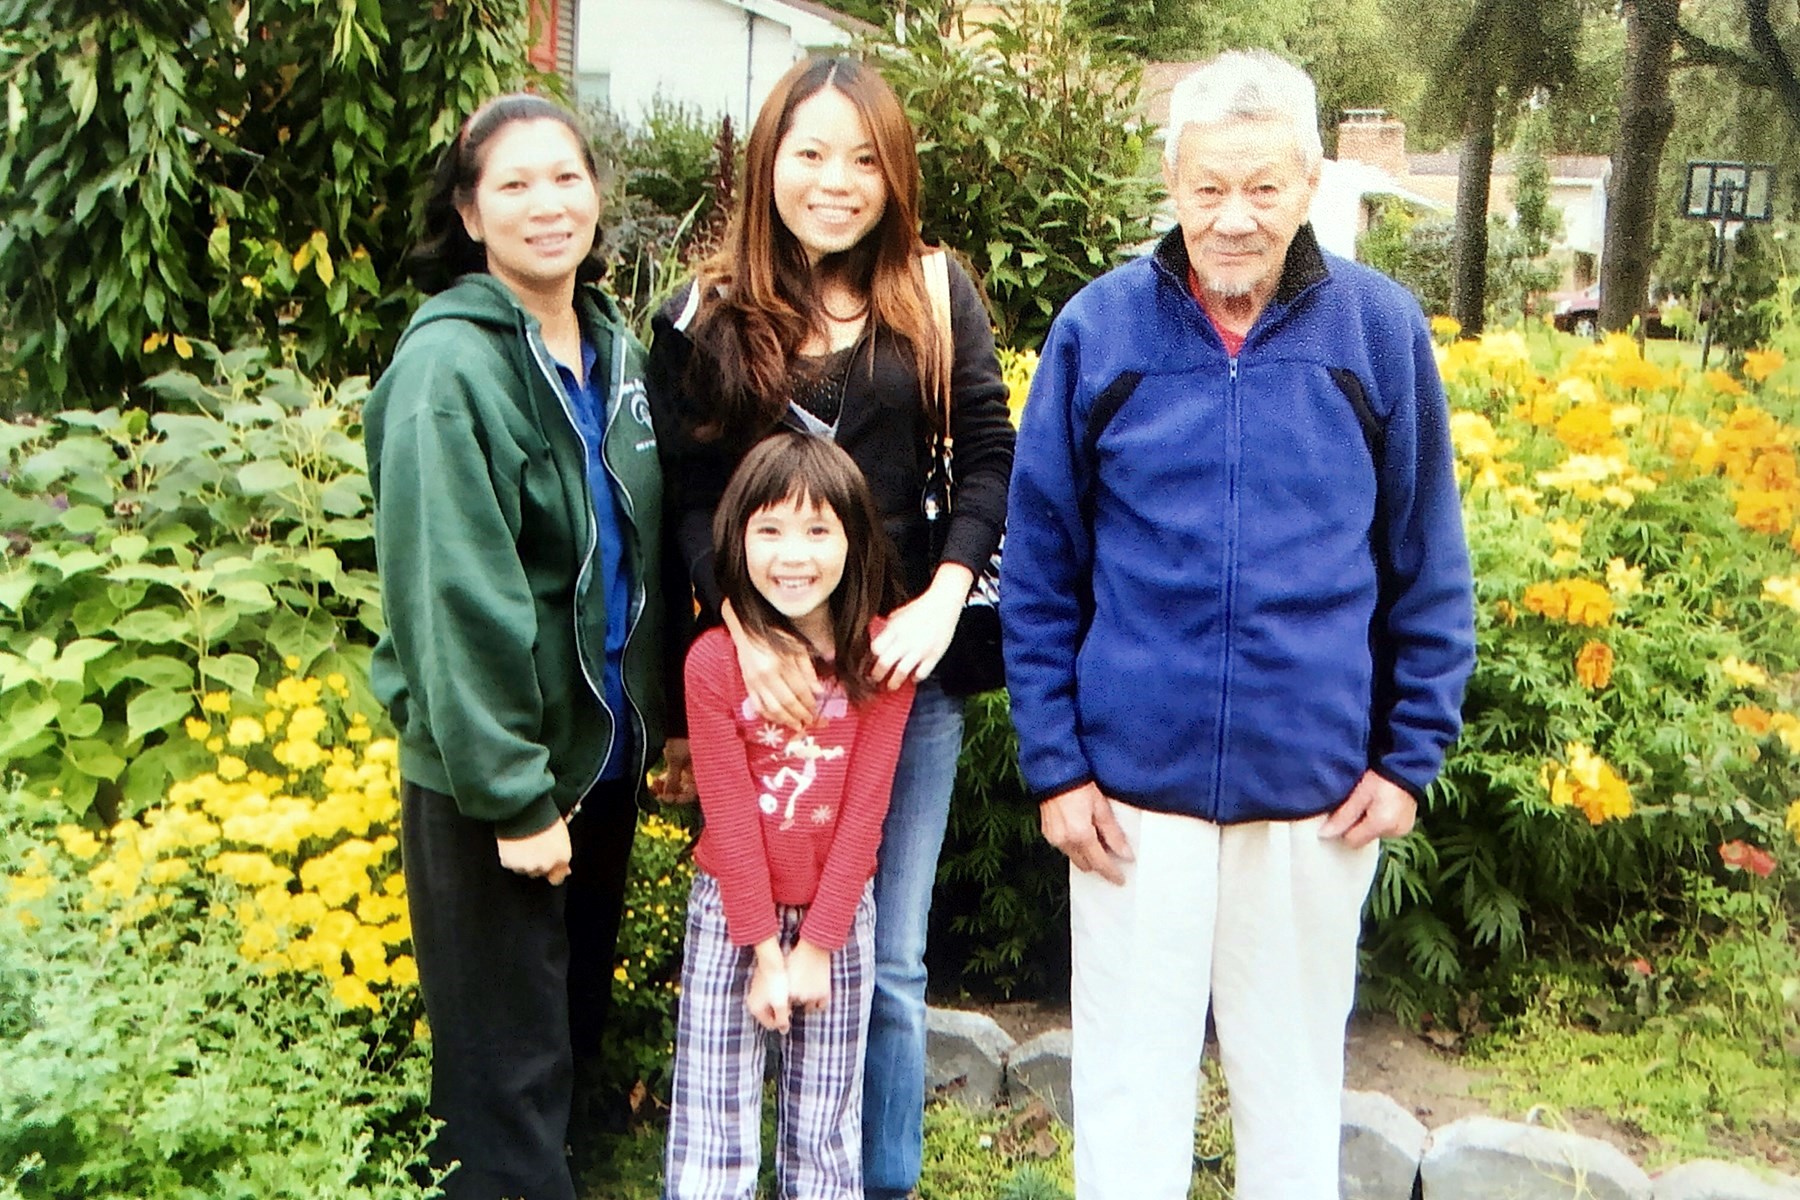 Obituary of Ông Vũ Thanh Tùng - 10/16/2020 - From the Family